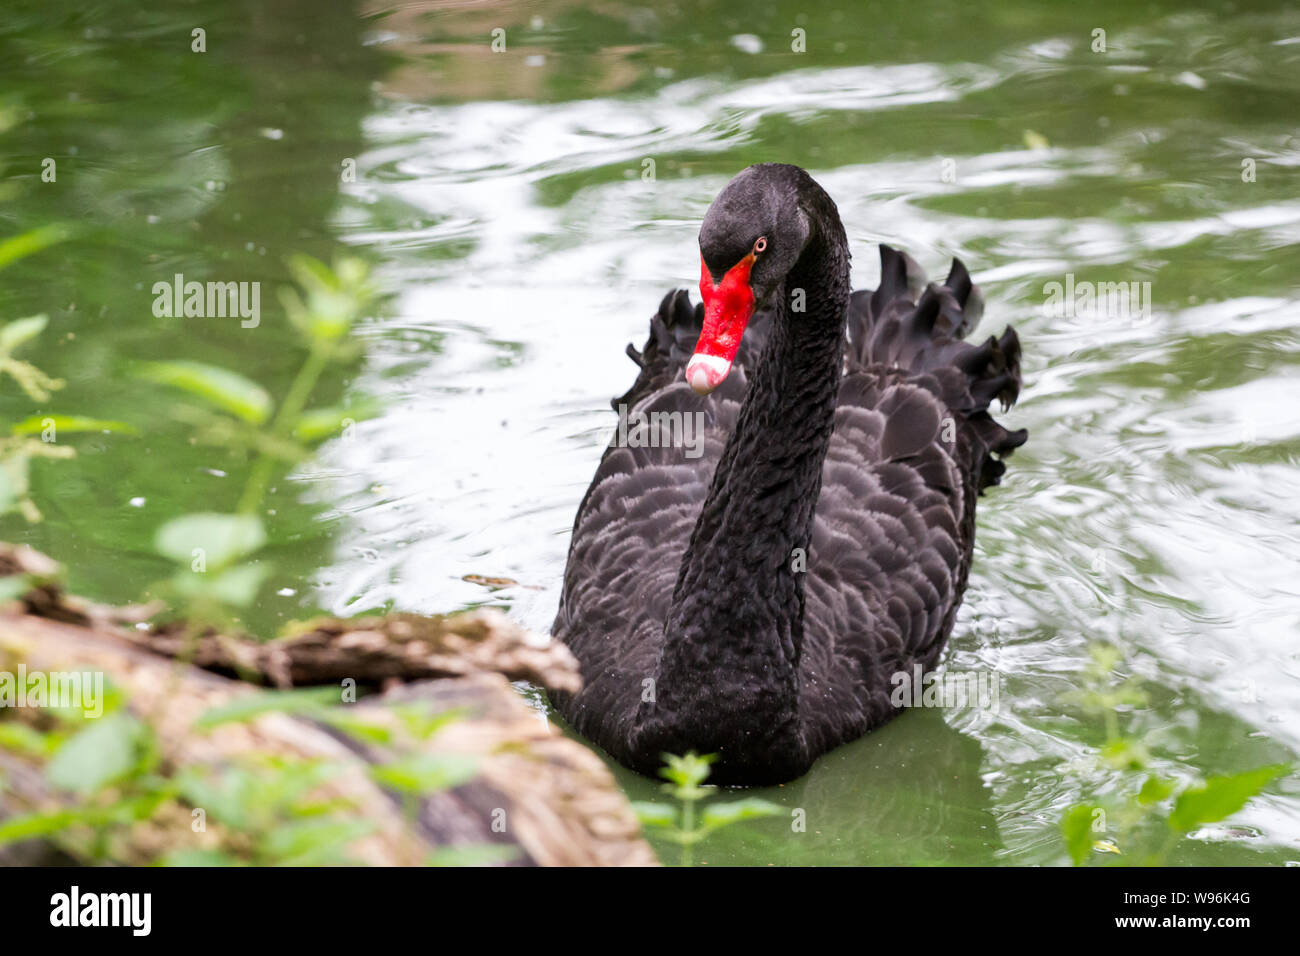 Cygnus atratus (black swan) in captivity, swimming in the water Stock Photo